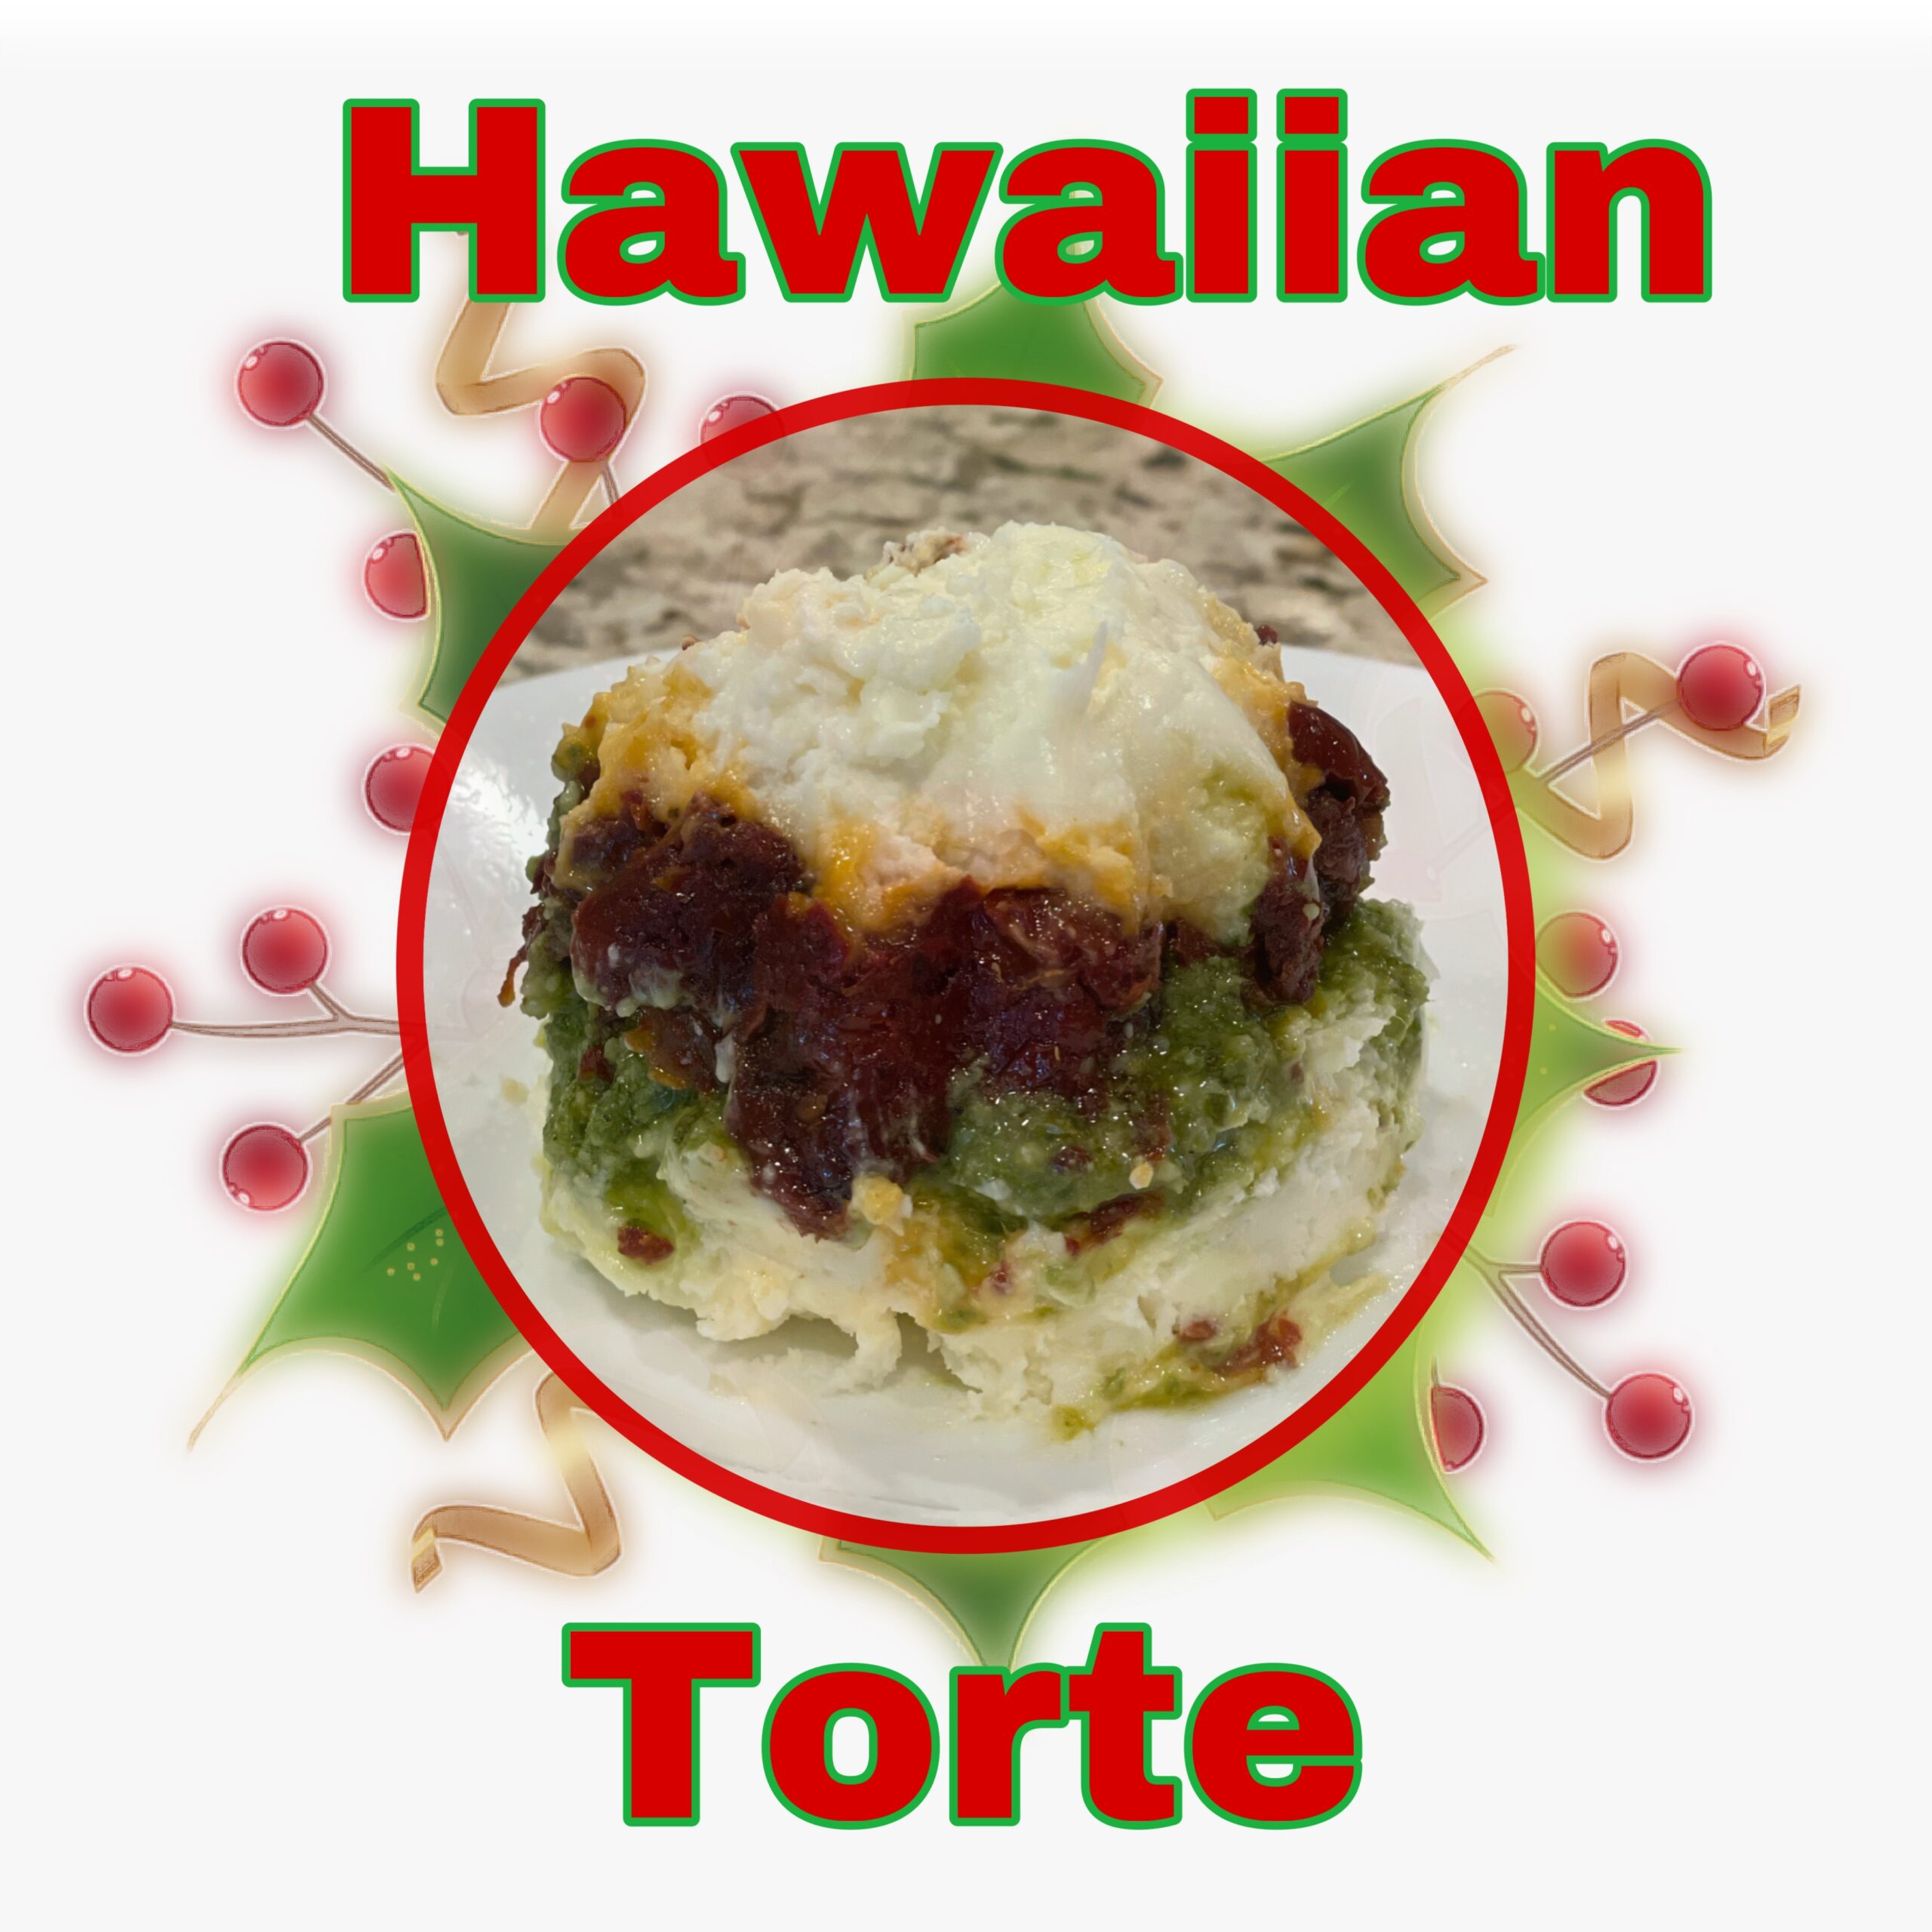 Hawaiian torte appetizer